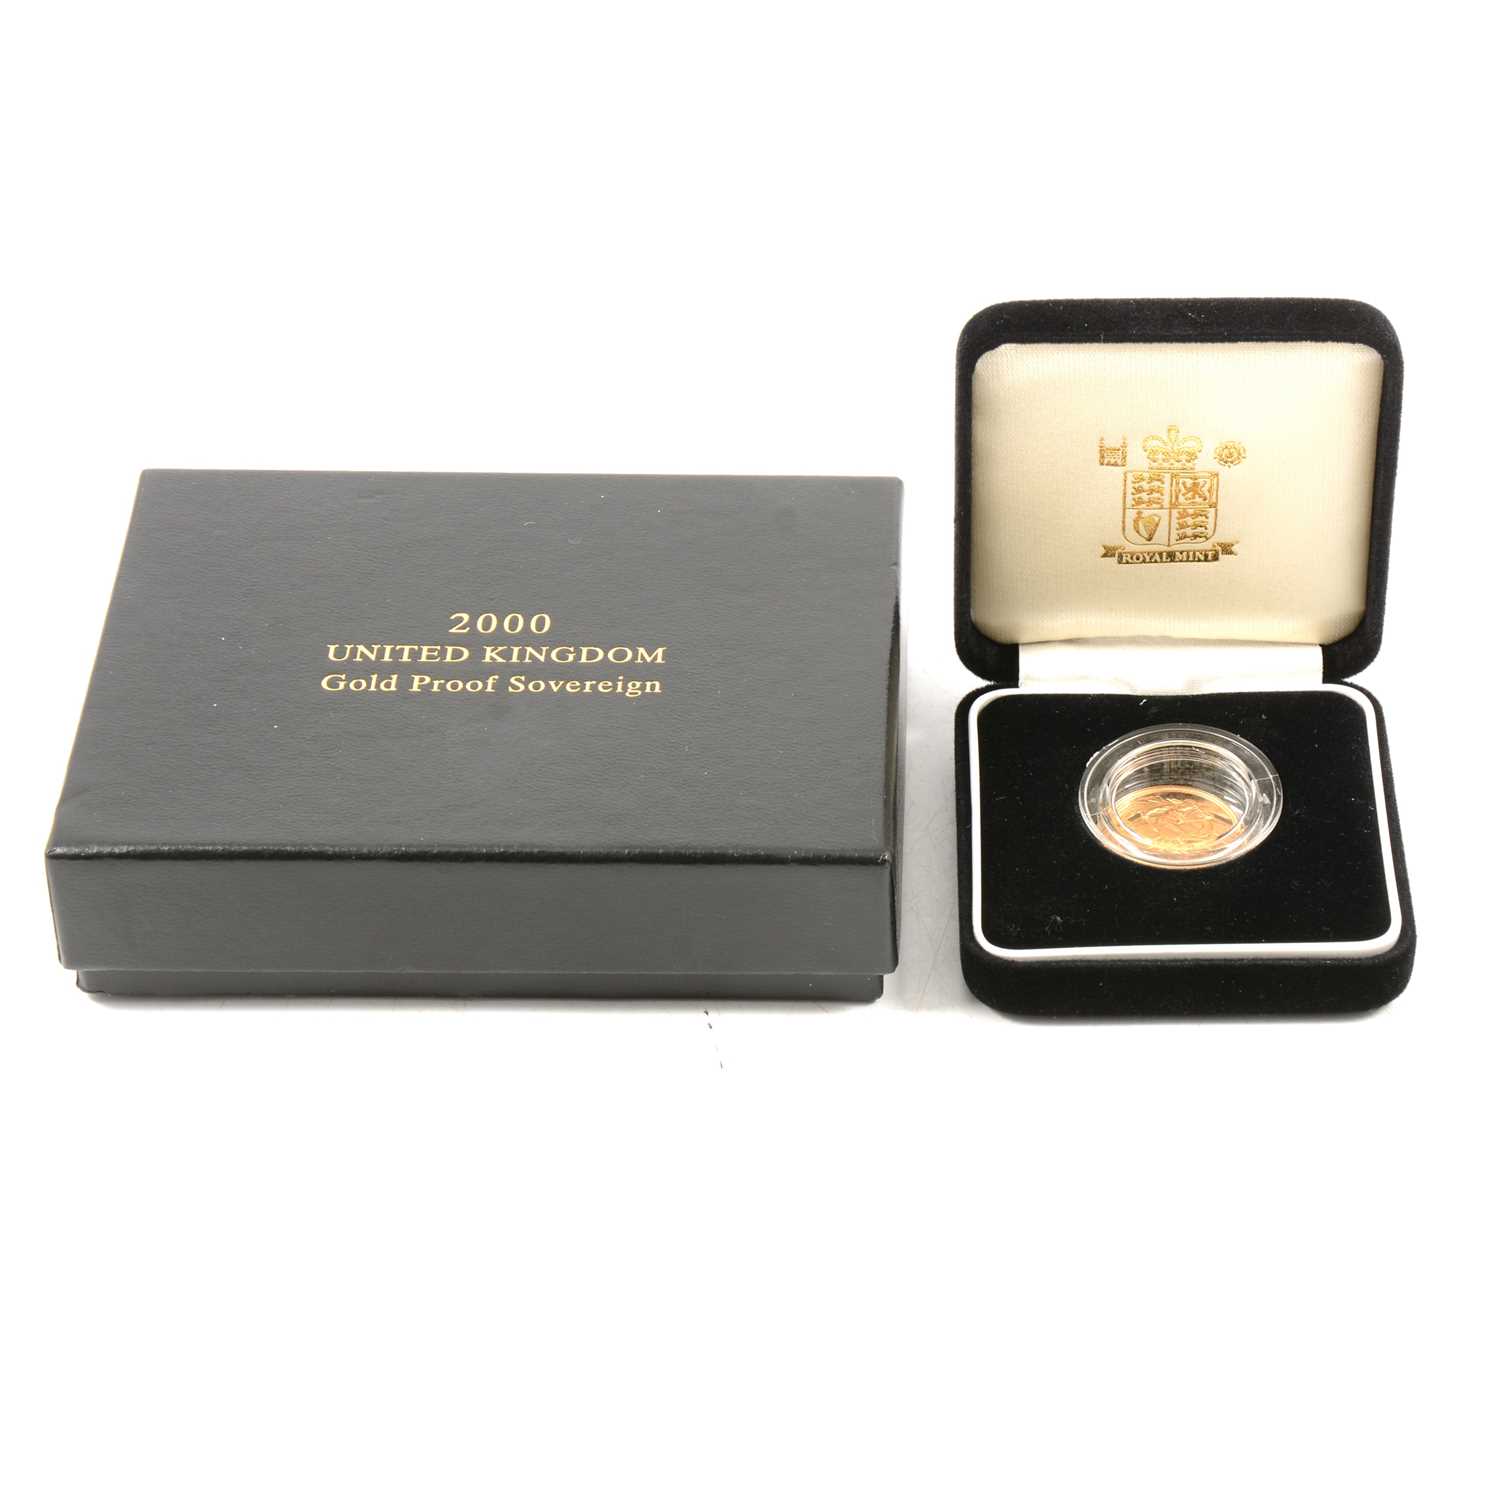 Lot 106 - A Gold Full Sovereign Elizabeth II 2000, Royal Mint United Kingdom Proof .